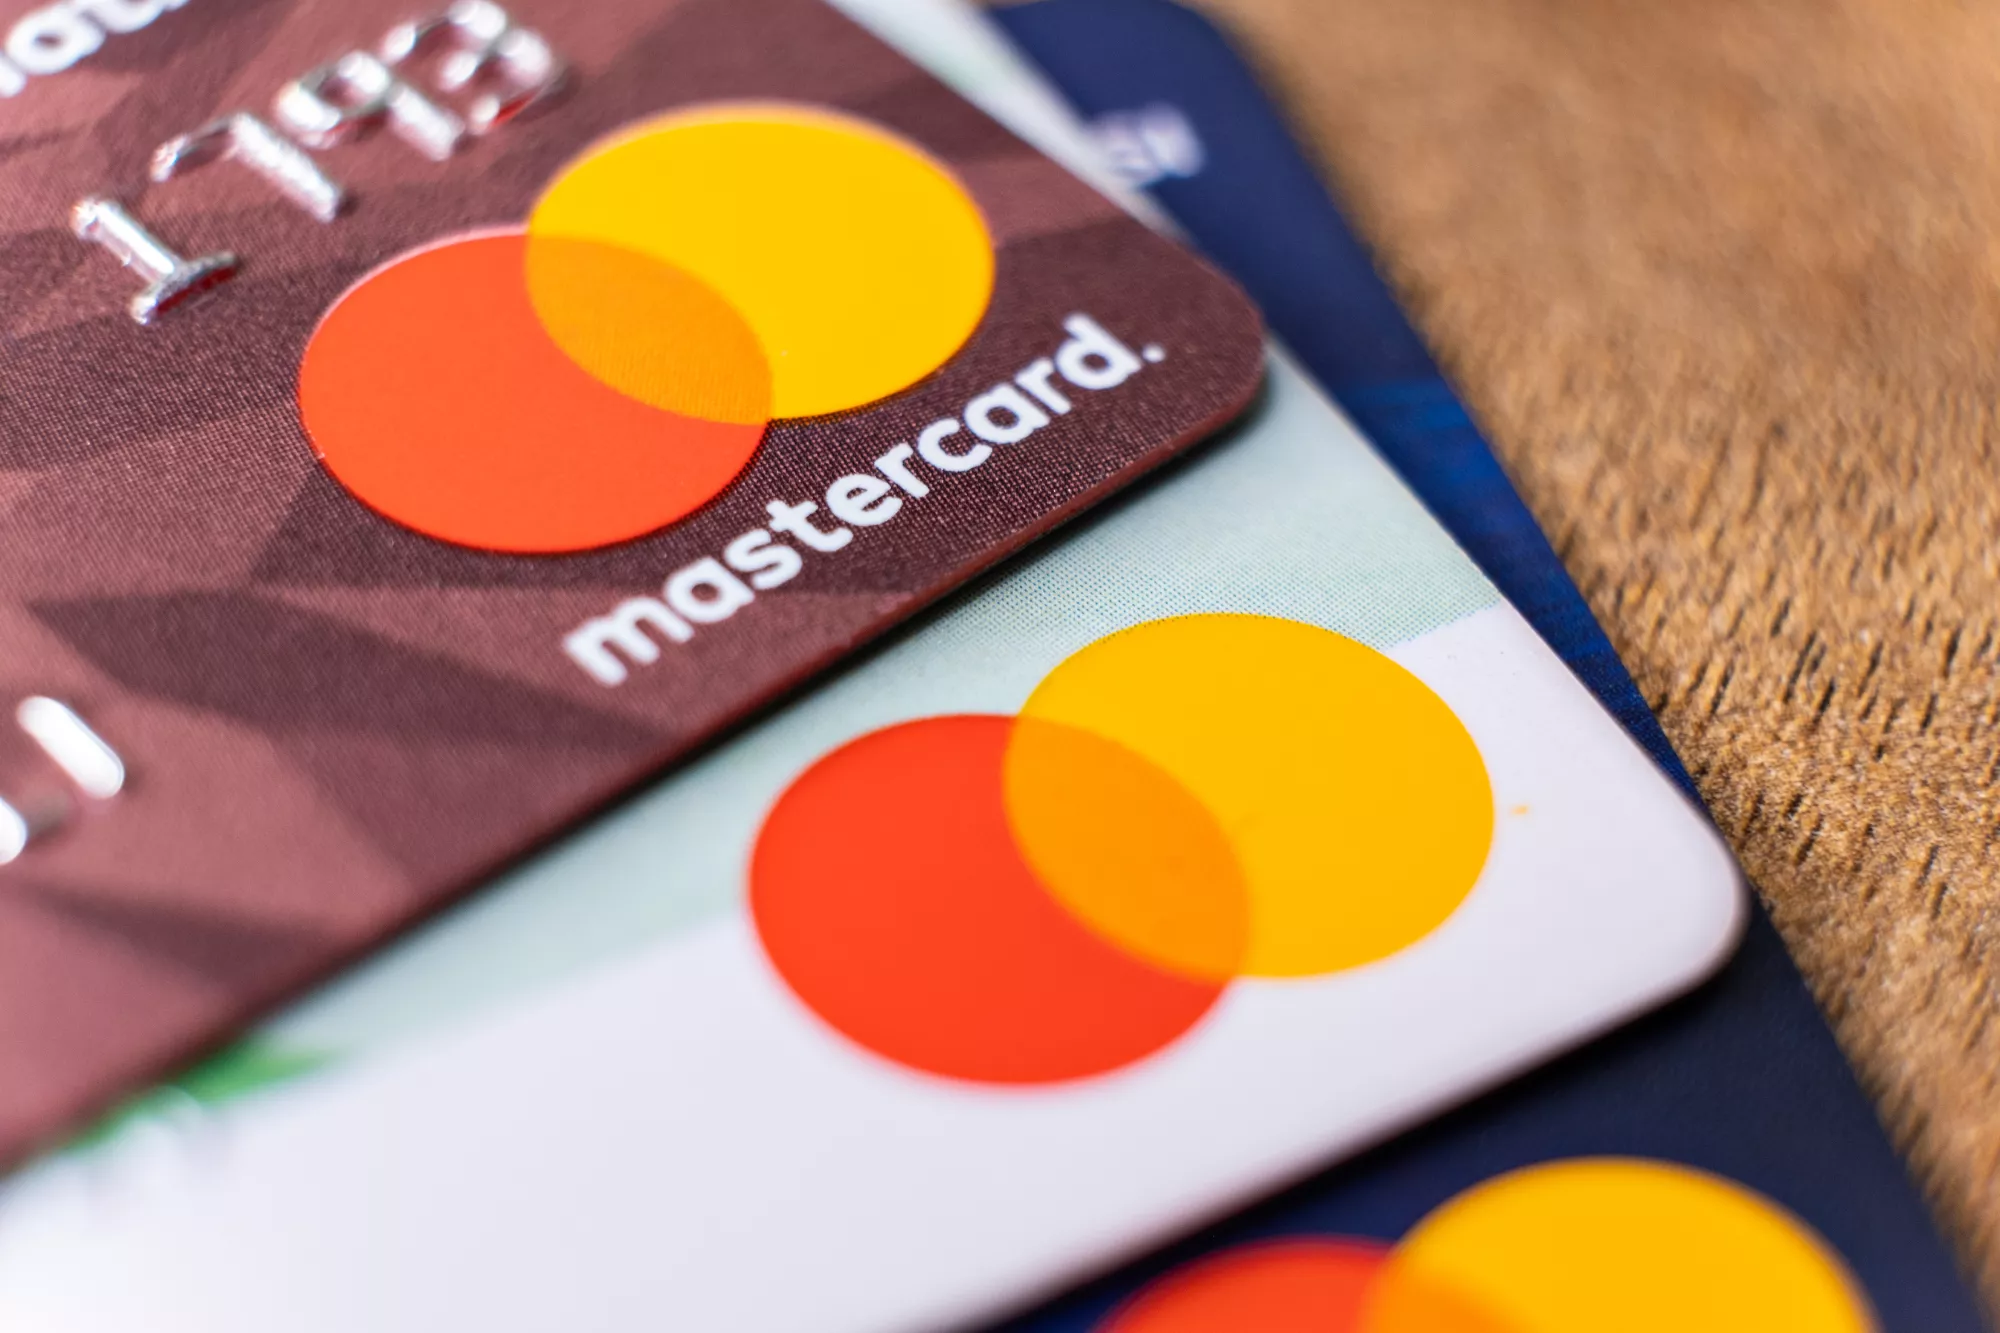 Mastercard credit card representing how to handle mastercard chargebacks and disputes